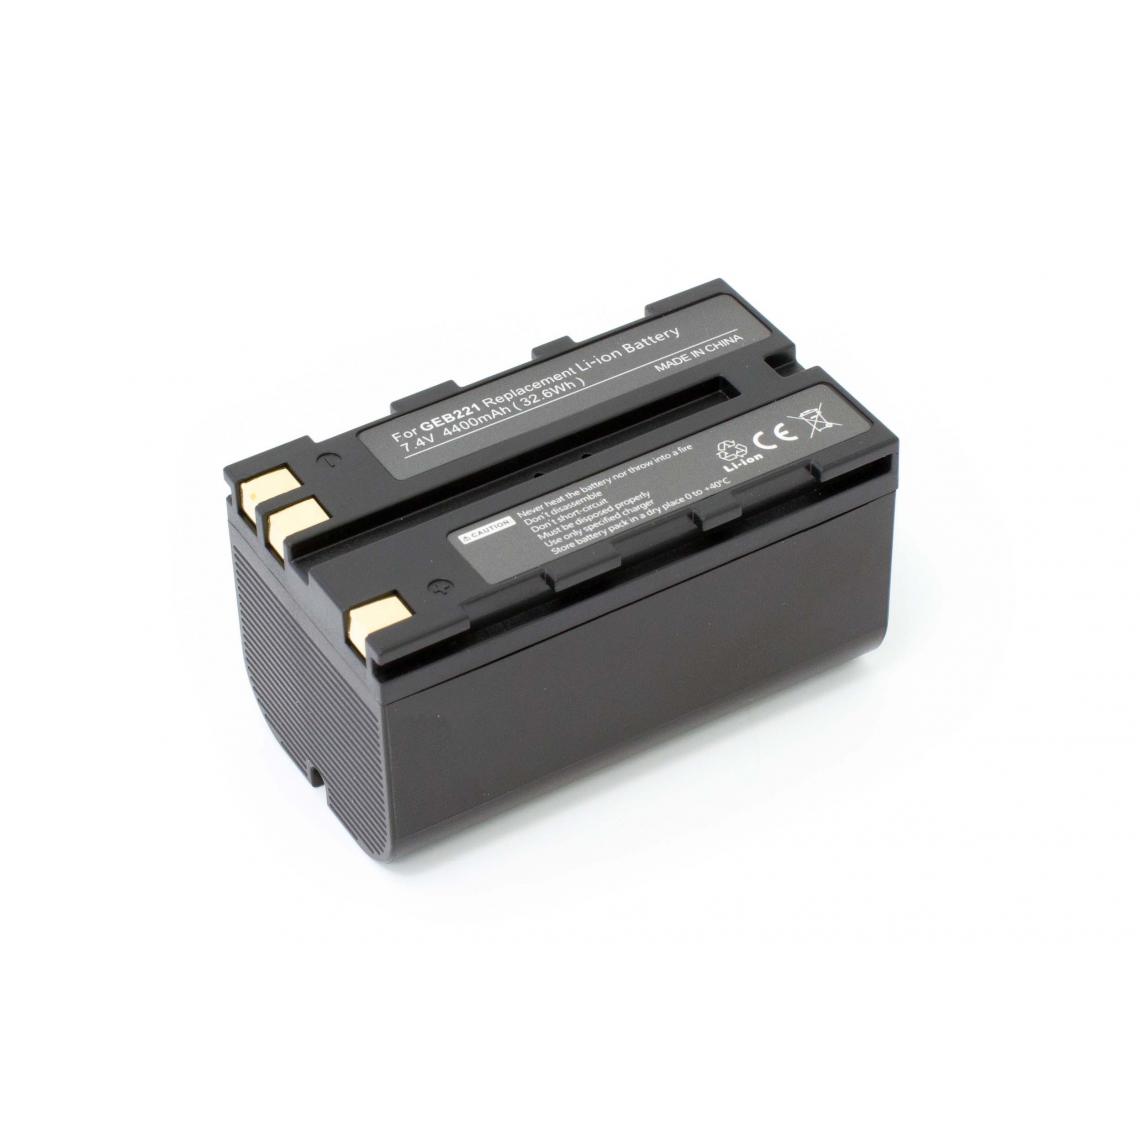 Vhbw - vhbw batterie compatible avec Leica Flexline TS02, TS06, TS09 appareil photo DSLR (4400mAh, 7,4V, Li-Ion) - Piles rechargeables